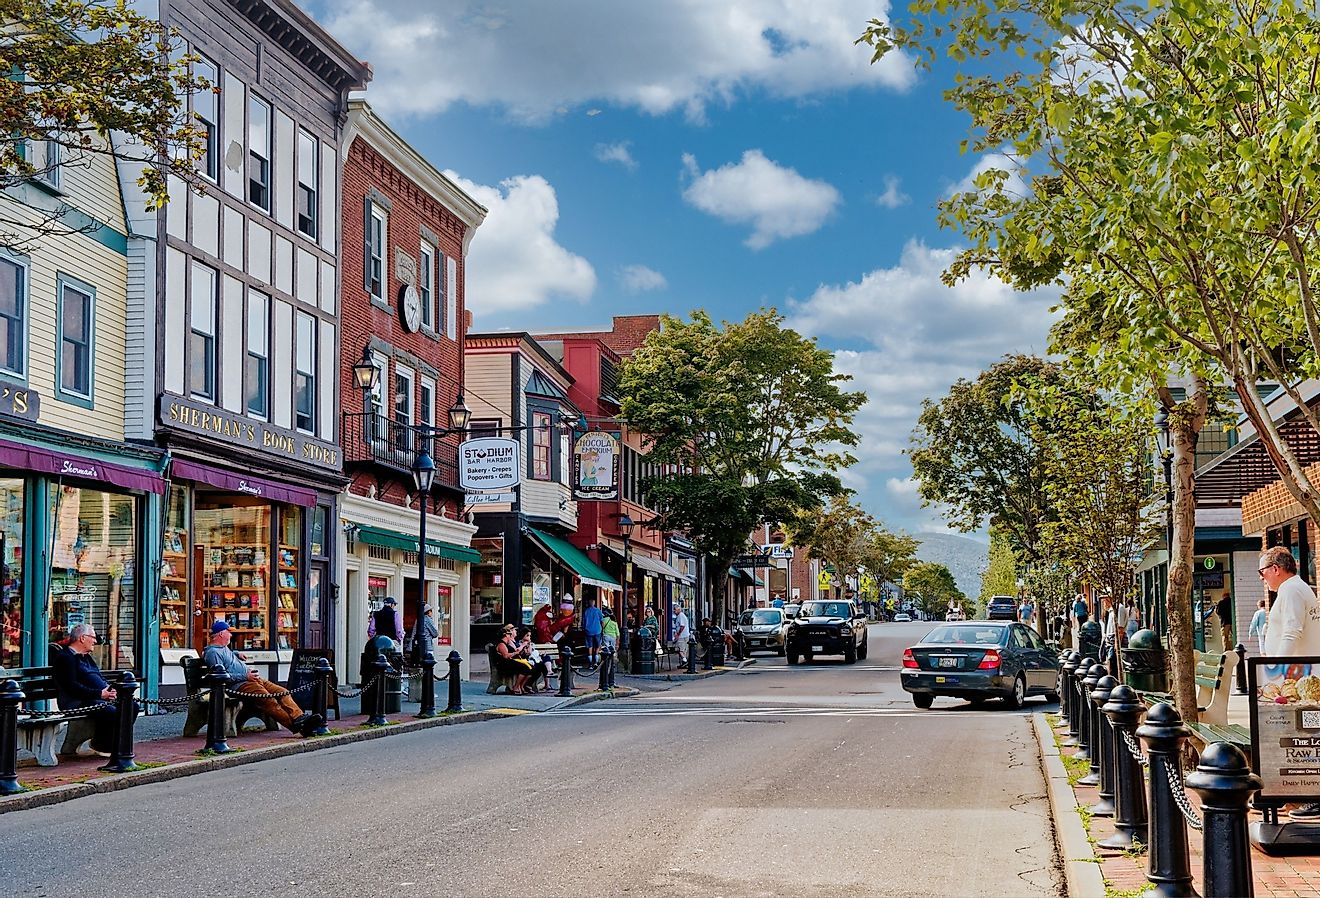 Downtown street in Bar Harbor, Maine. Image credit Darryl Brooks via Shutterstock